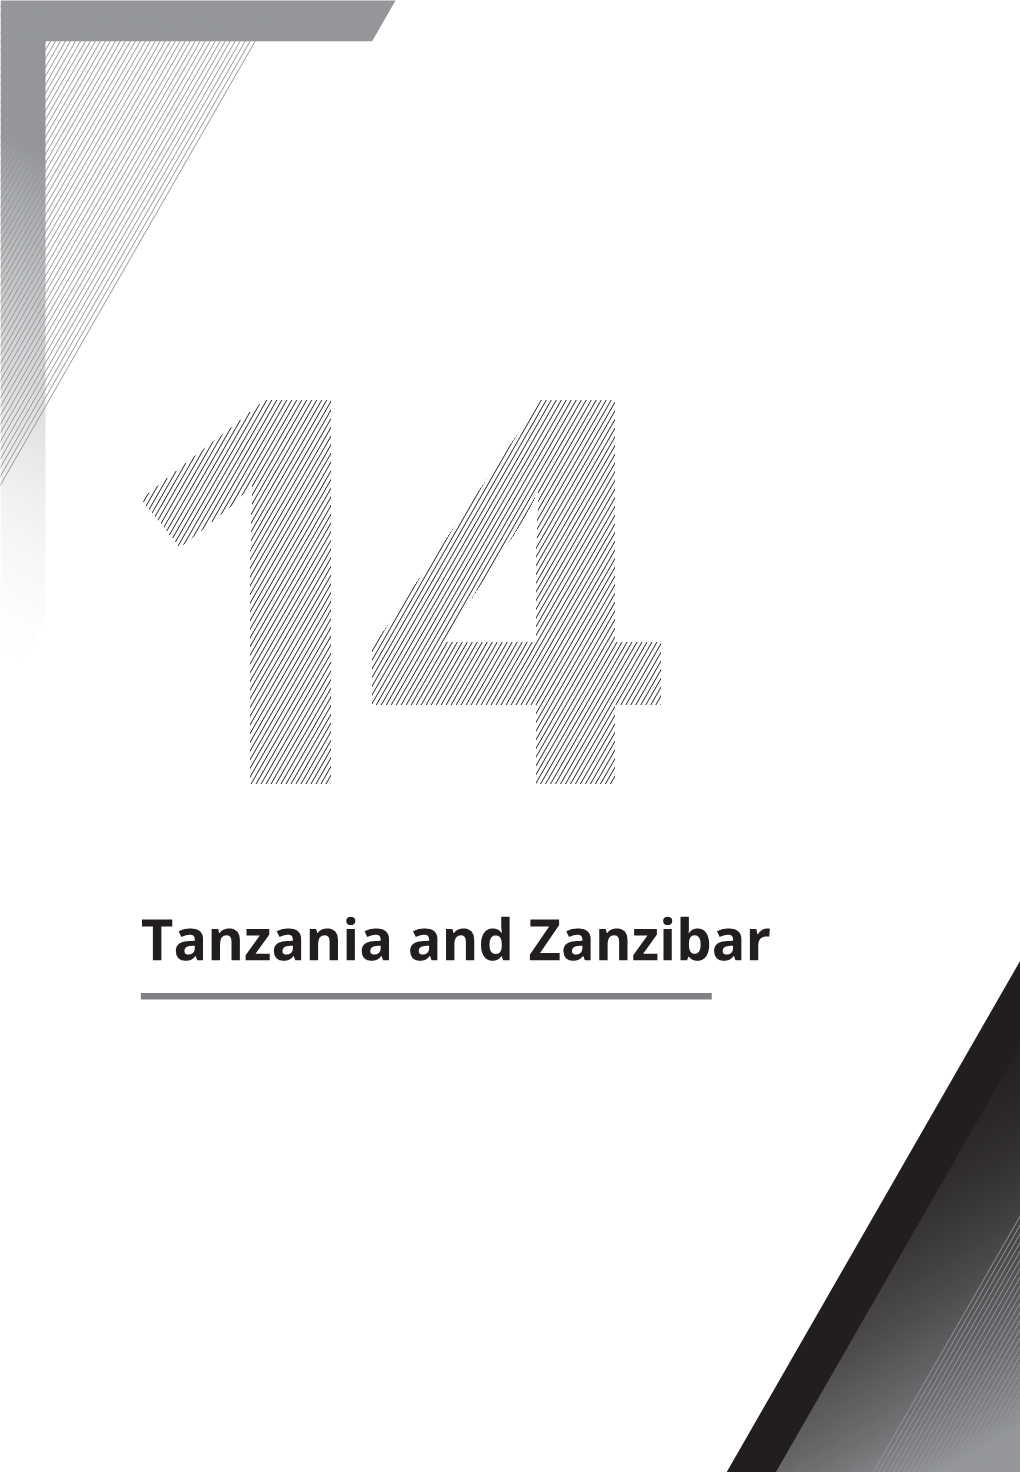 Tanzania and Zanzibar 1 Introduction